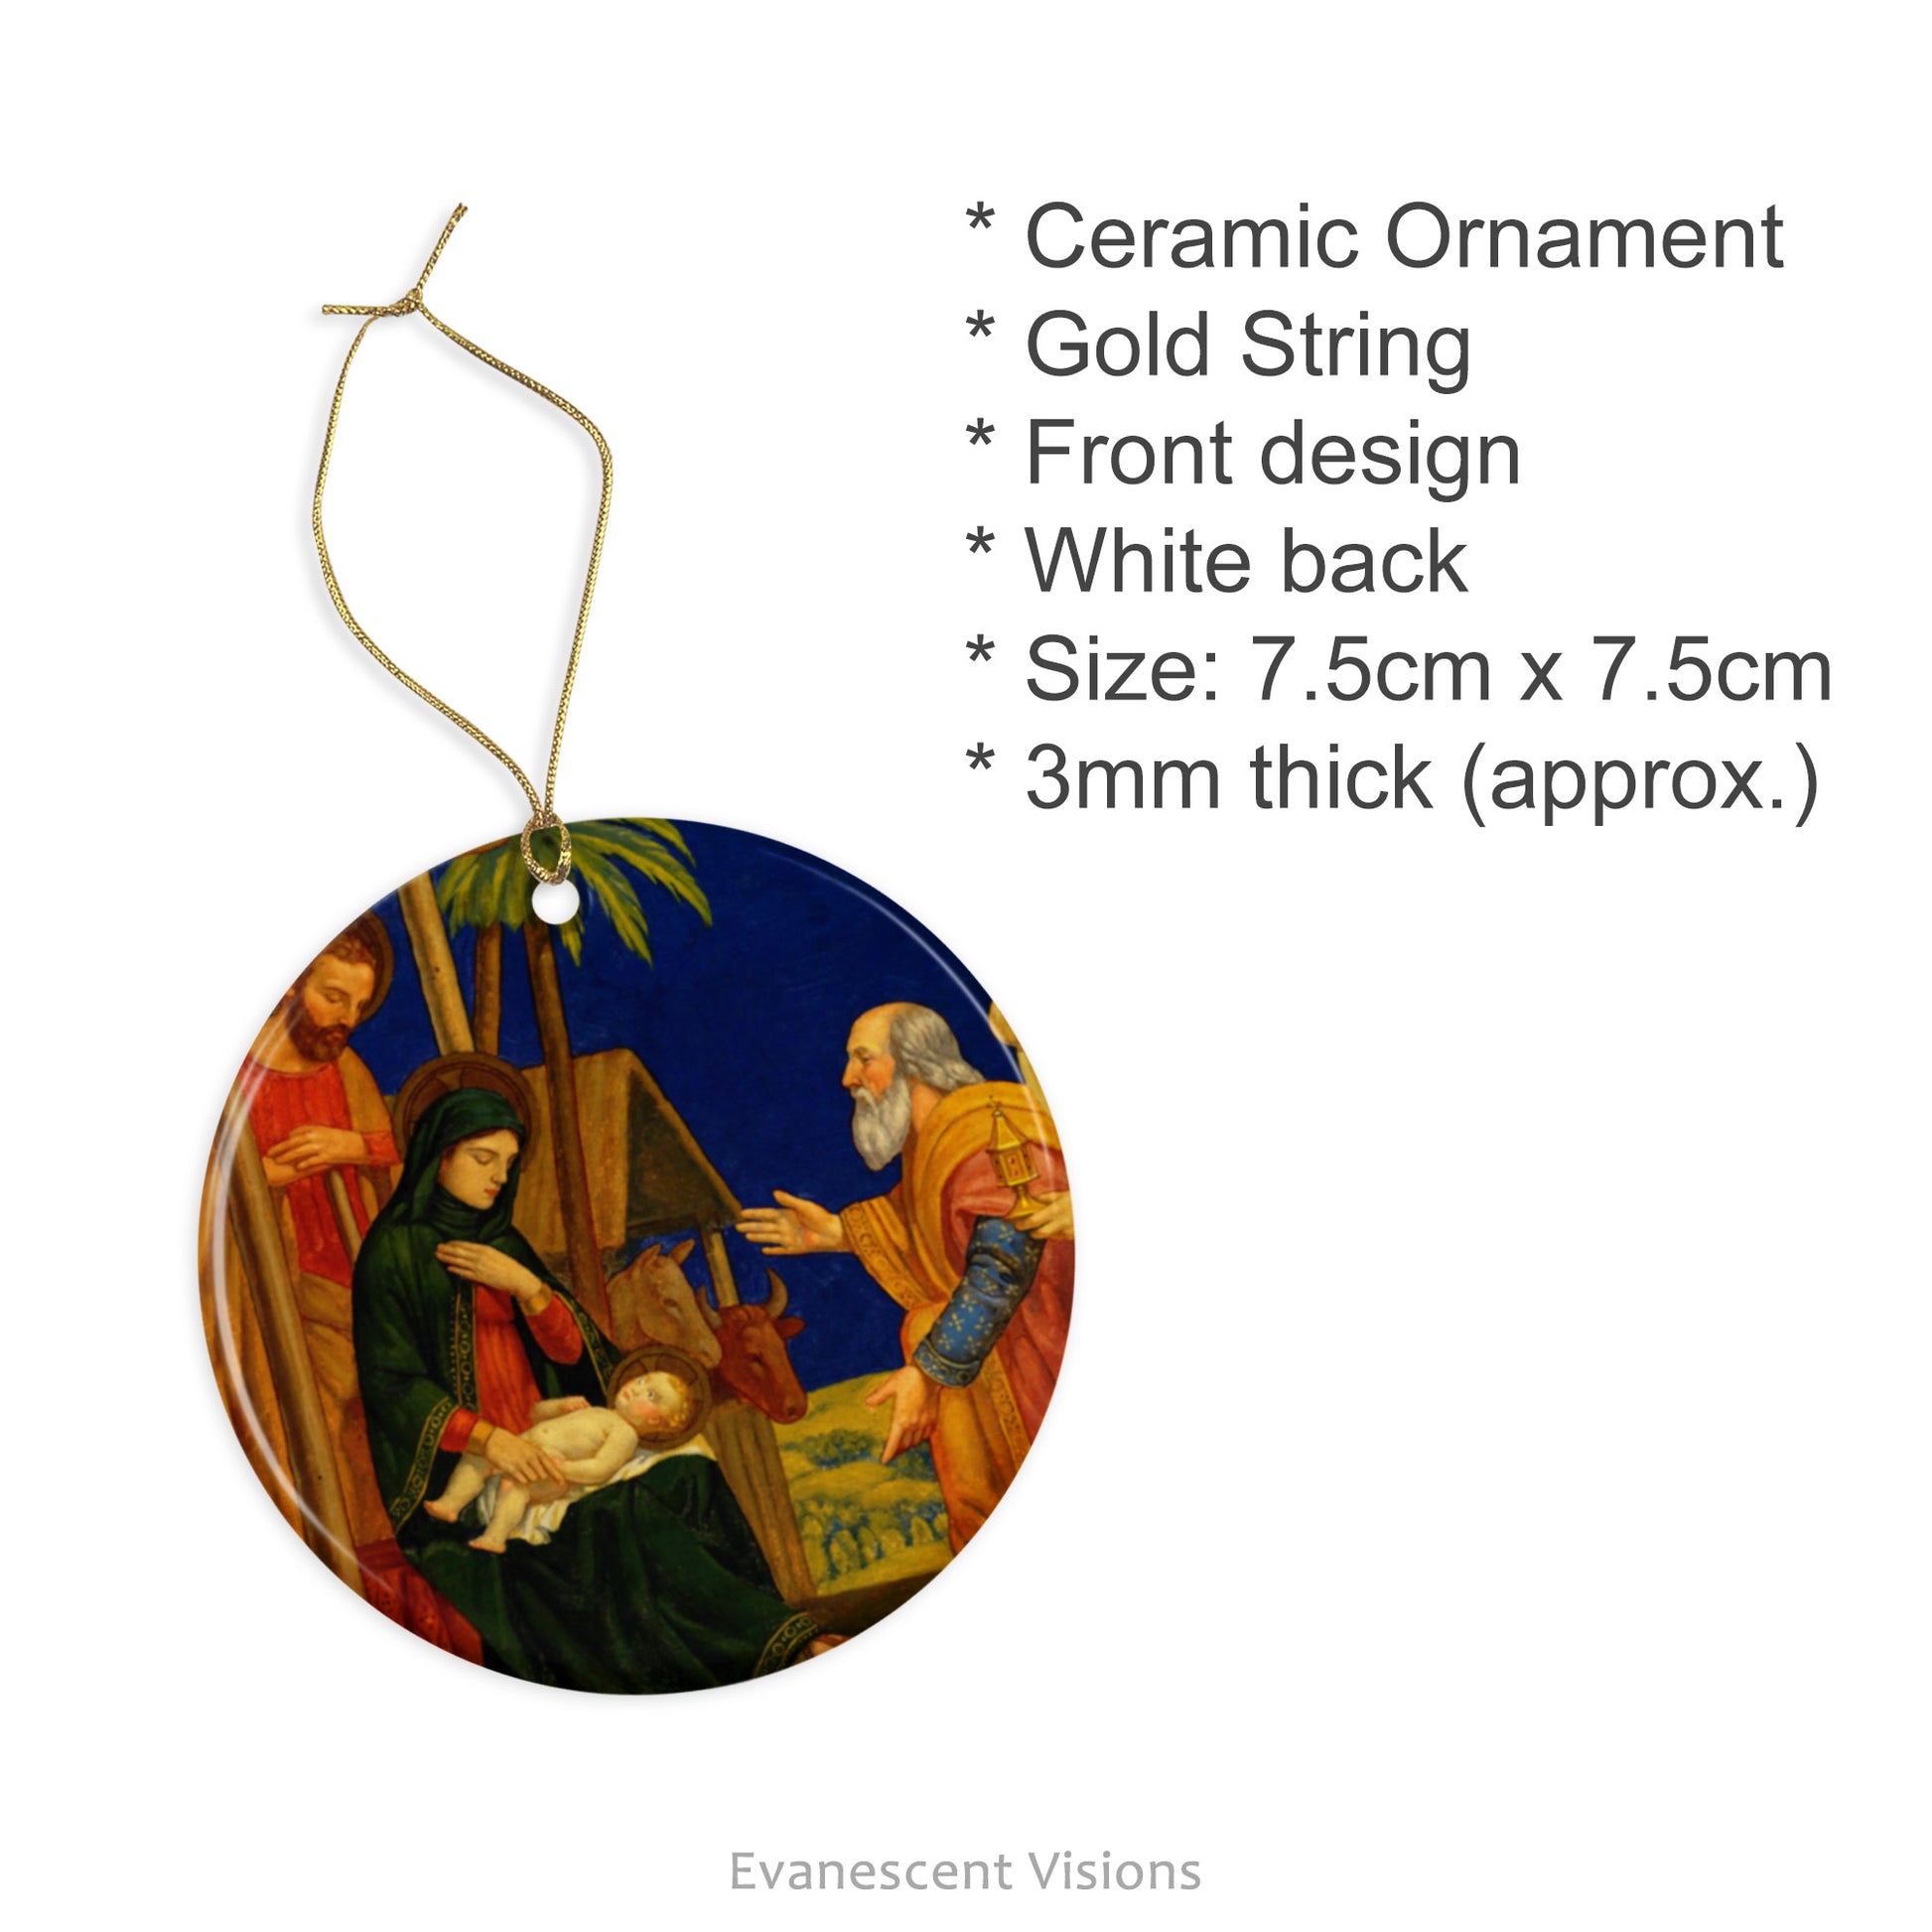 Ceramic Christmas ornament product details